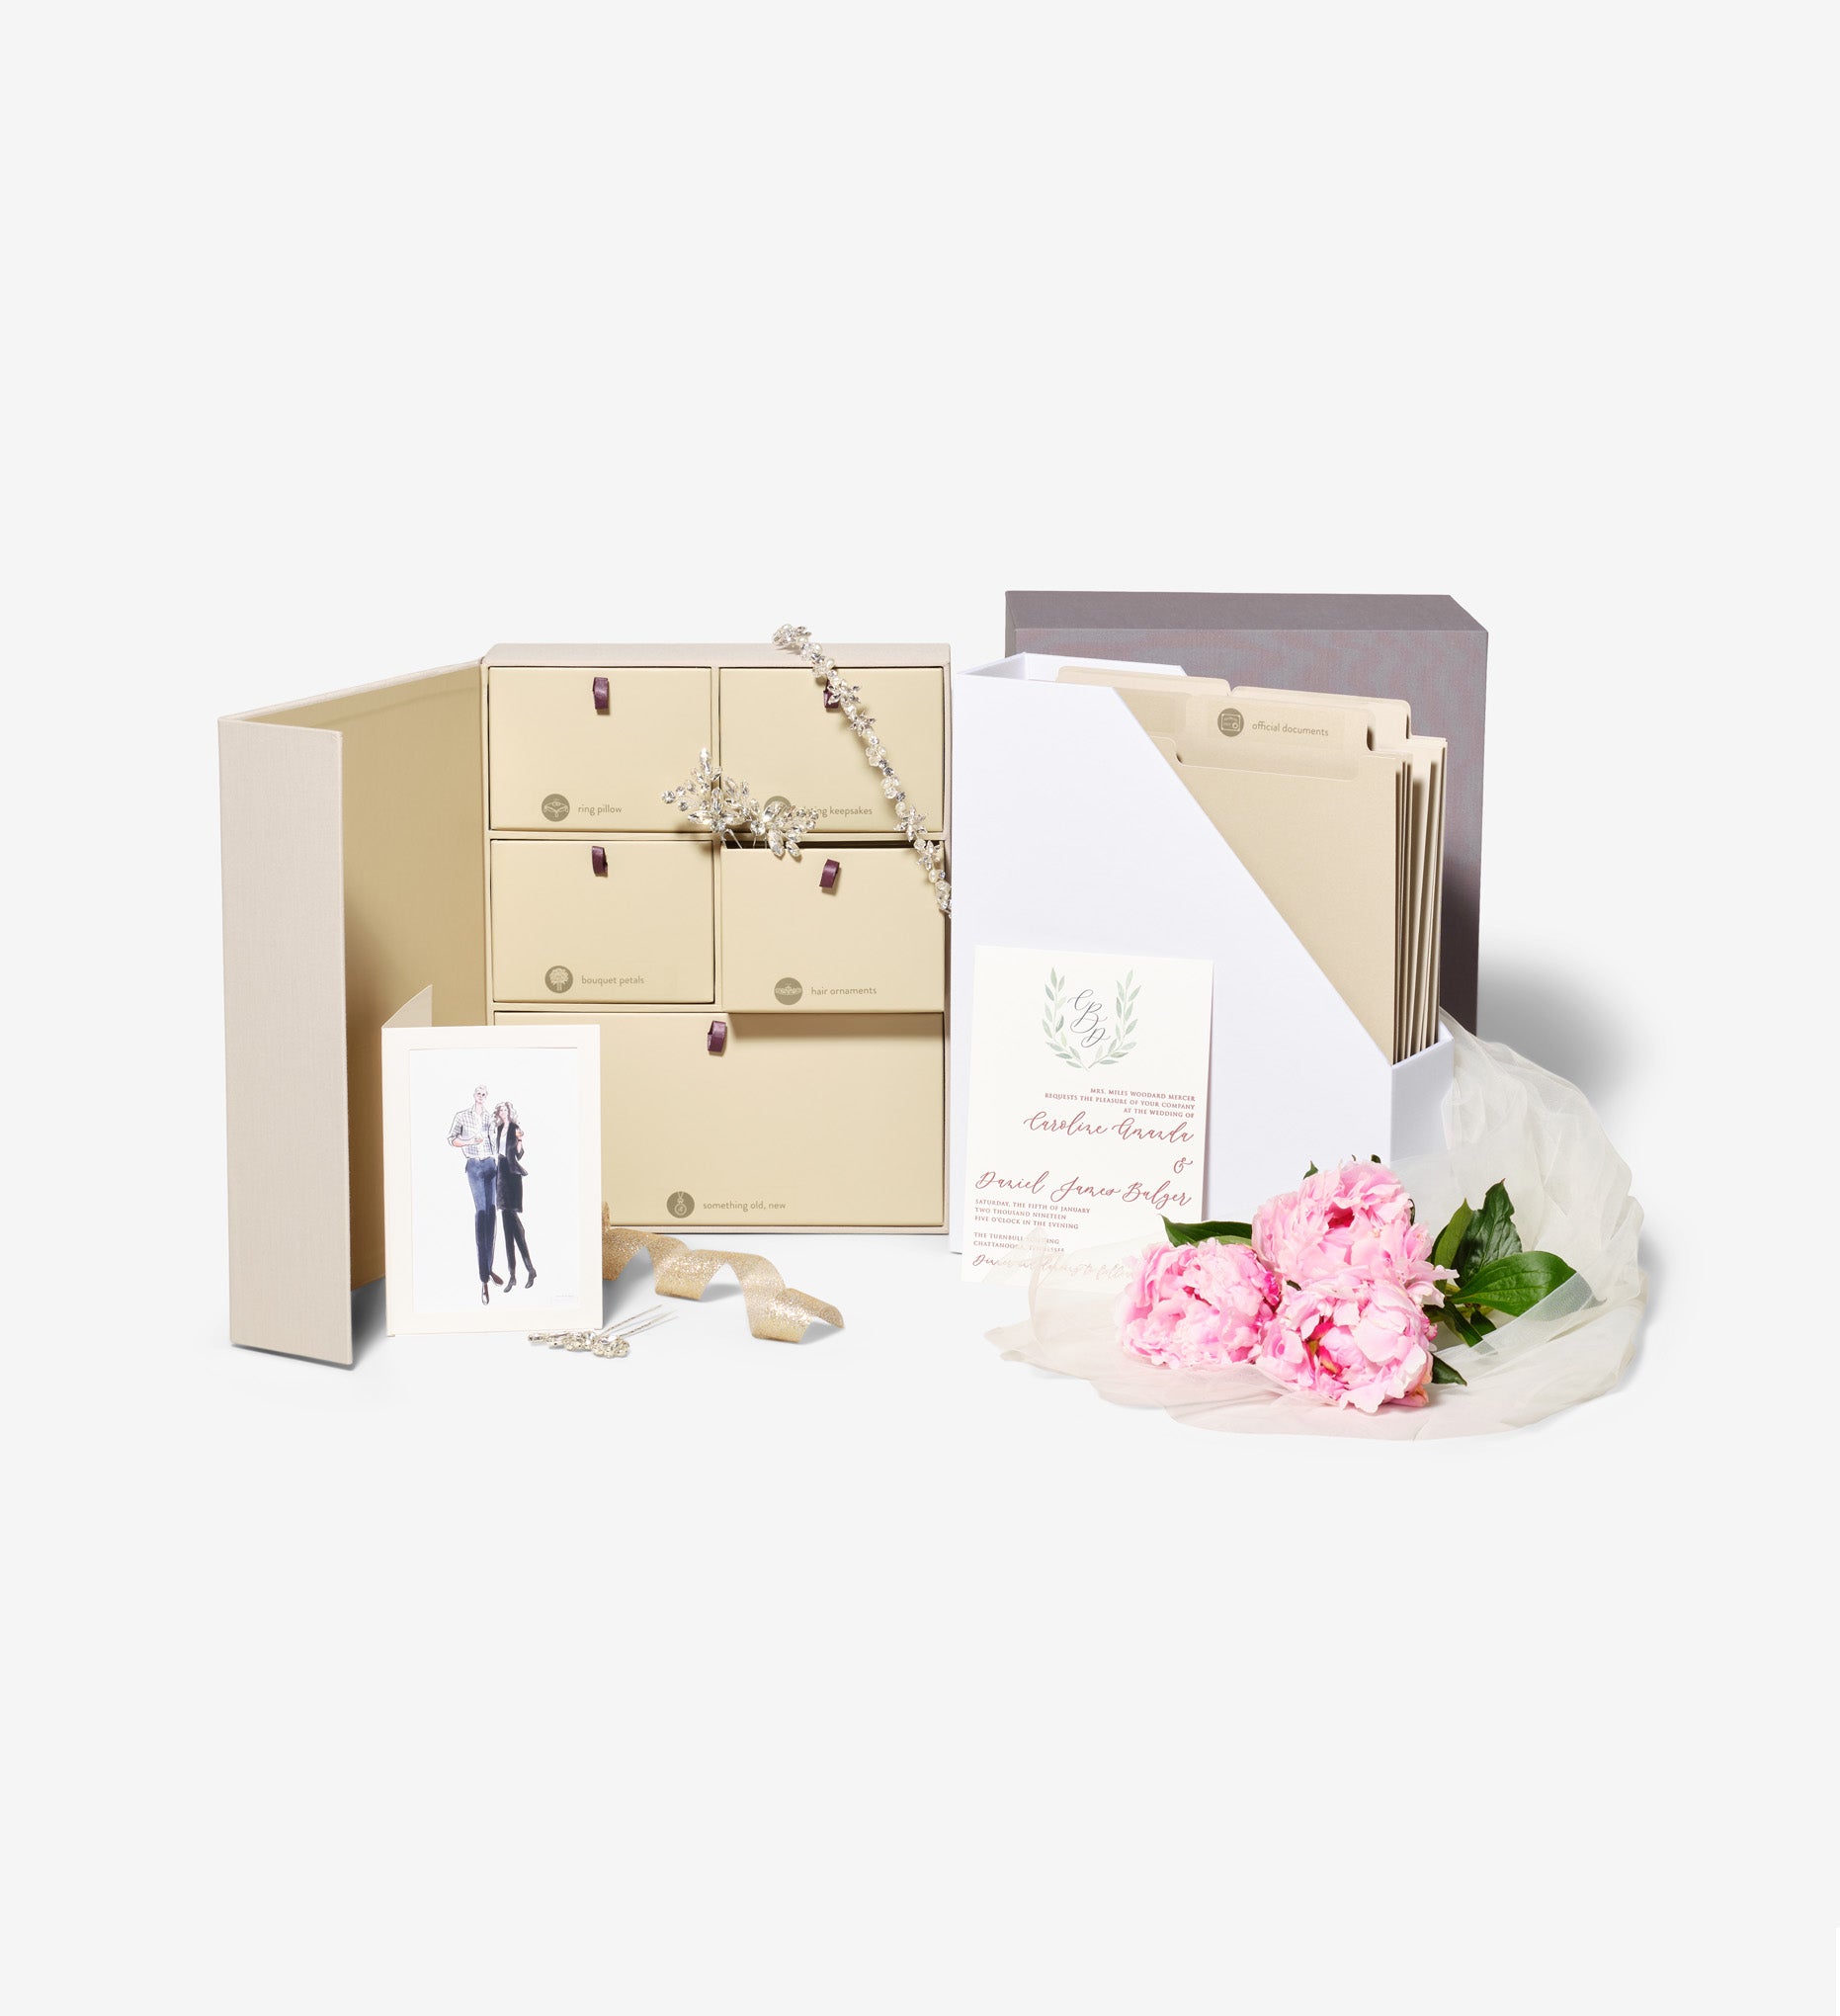 Wedding Keepsake Box, Wedding Memory Box